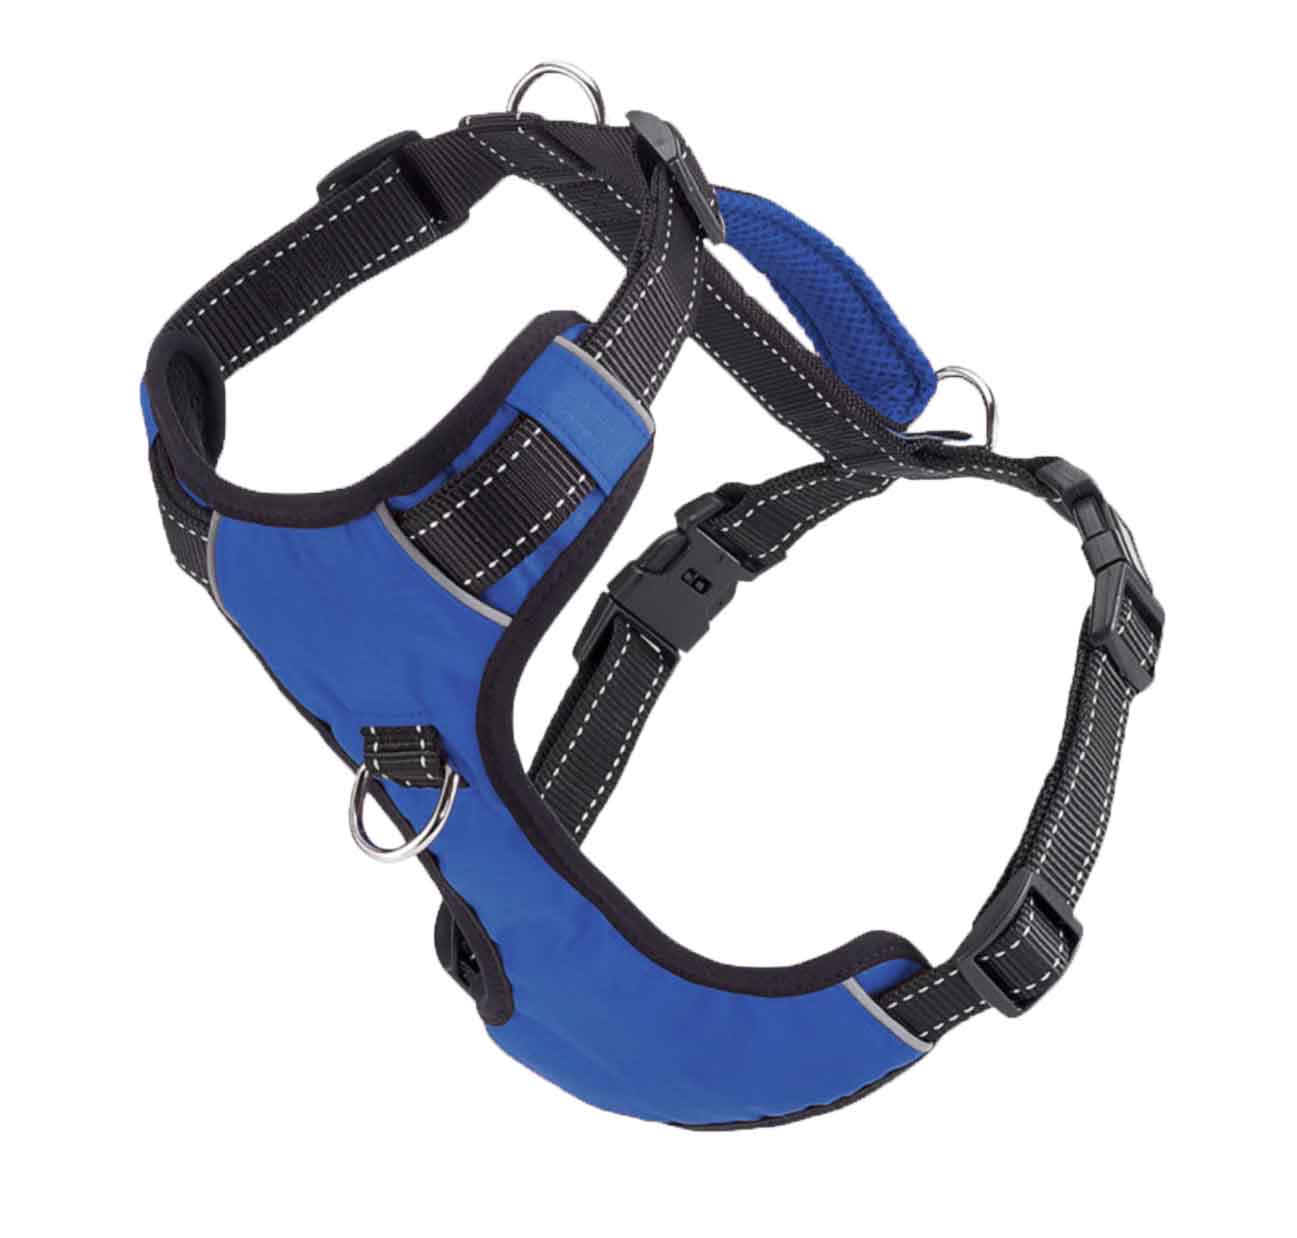 Chesapeake bay dog harness in blue